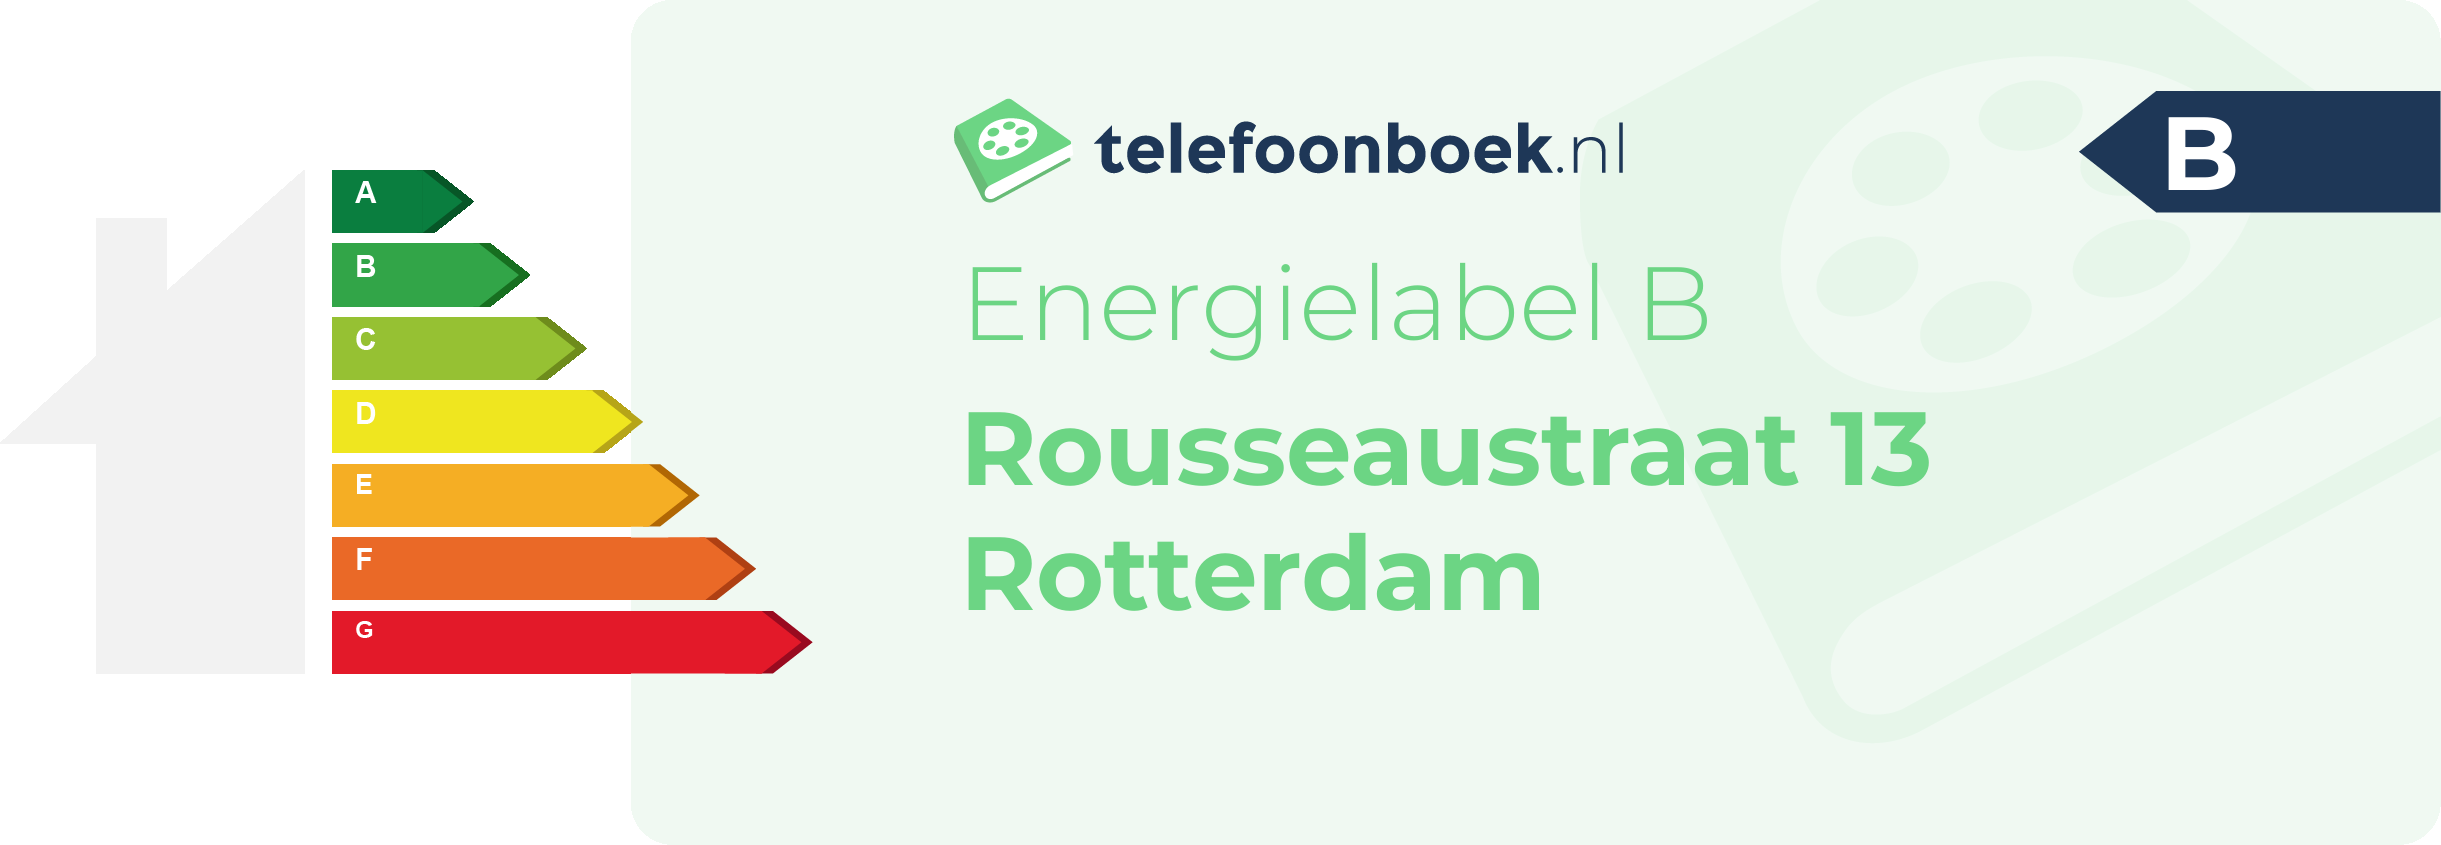 Energielabel Rousseaustraat 13 Rotterdam